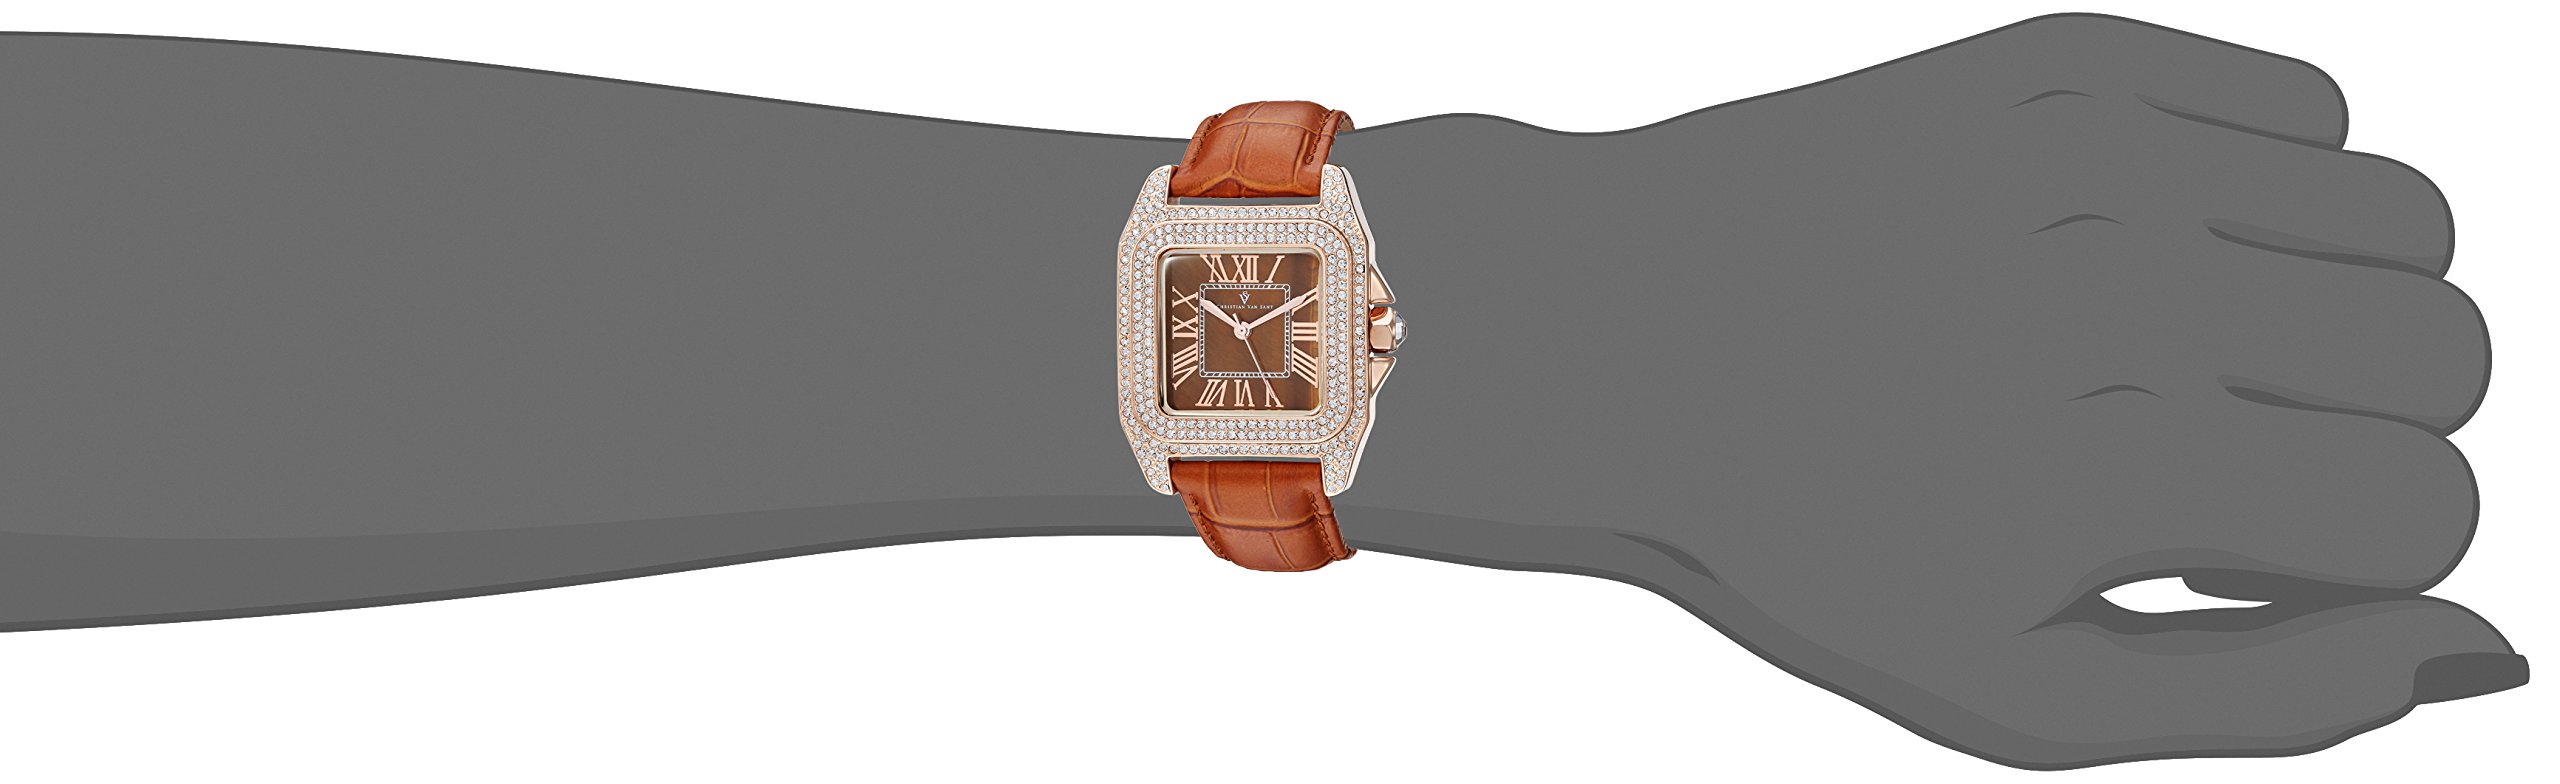 Christian Van Sant Women's CV4423 Radieuse Analog Display Quartz Brown Watch